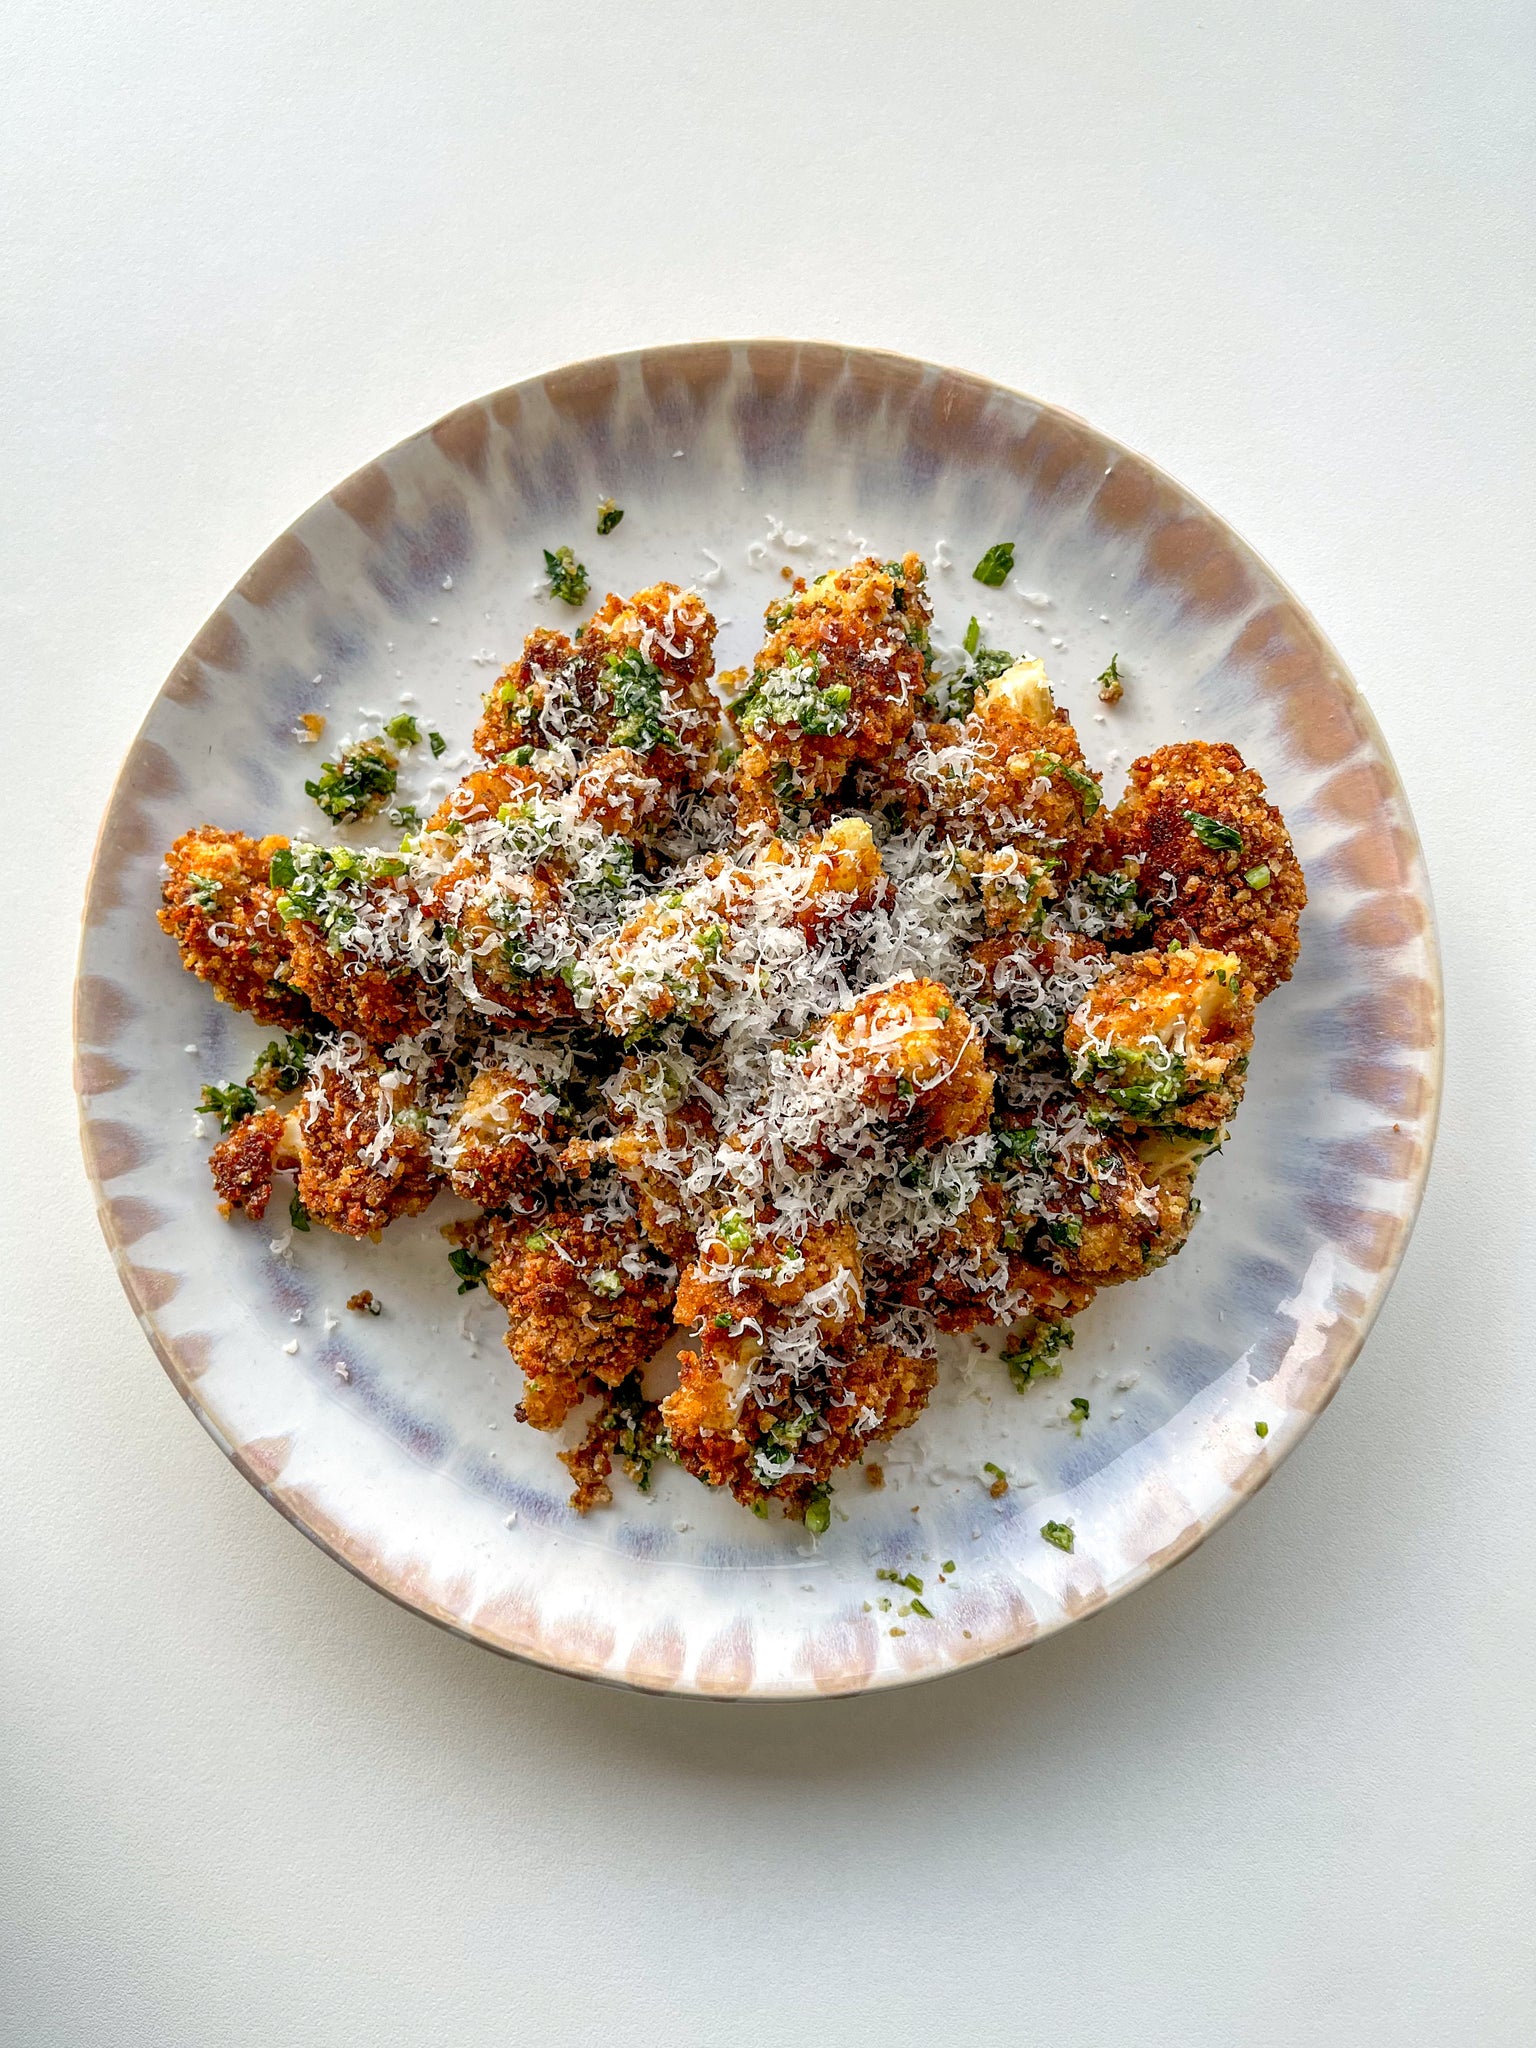 Spicy Crunchy Cauliflower Bites with Parmesan Chimichurri